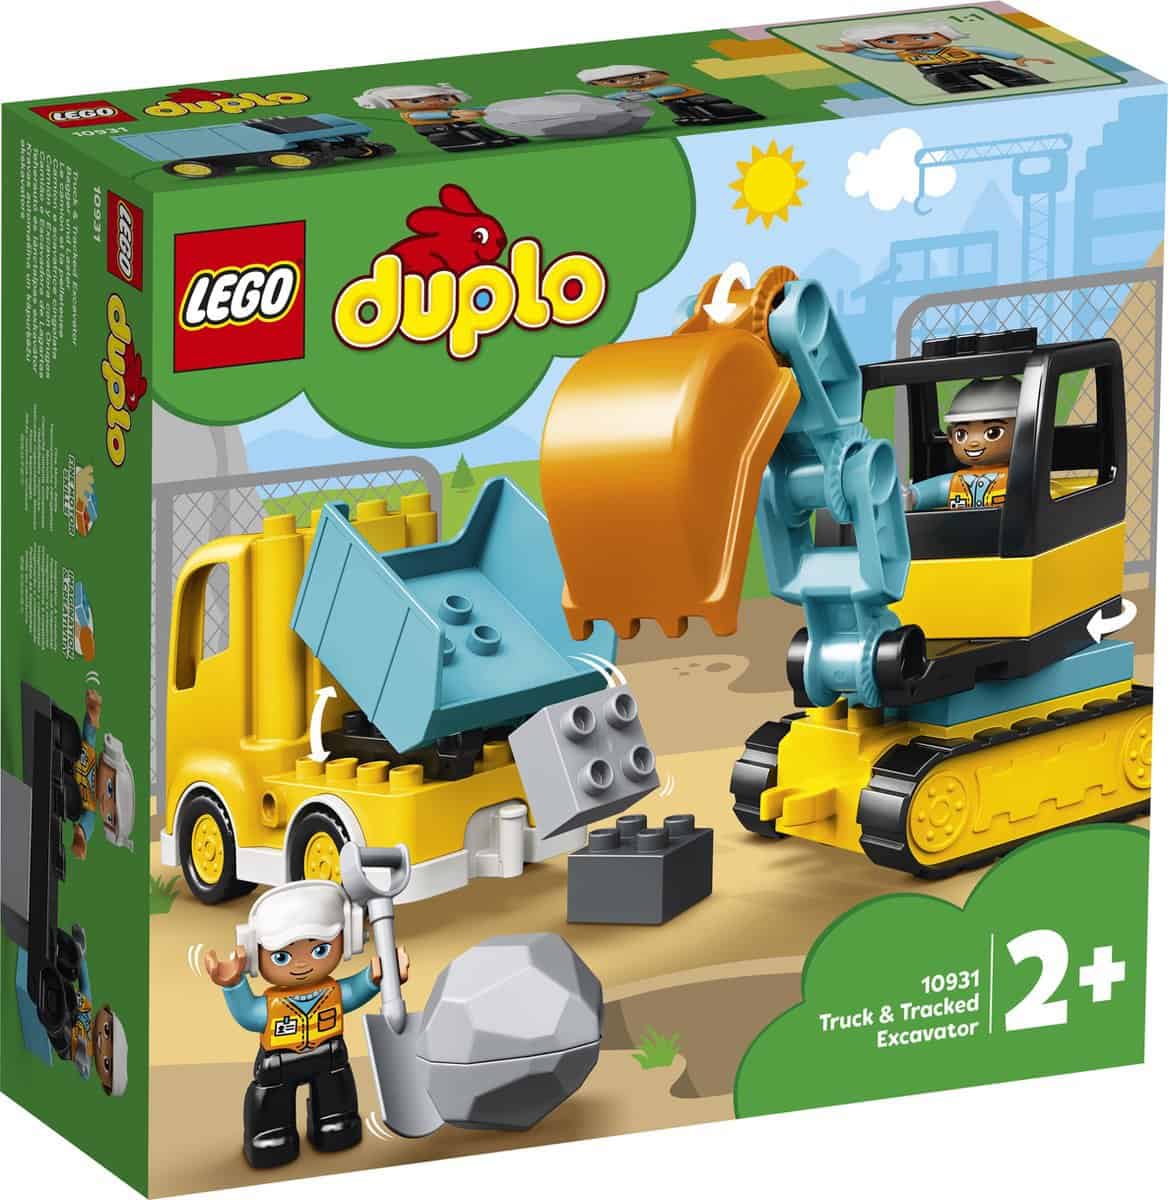 Best Construction Toys For Toddler Boy- Lego DuploTruck & Excavator